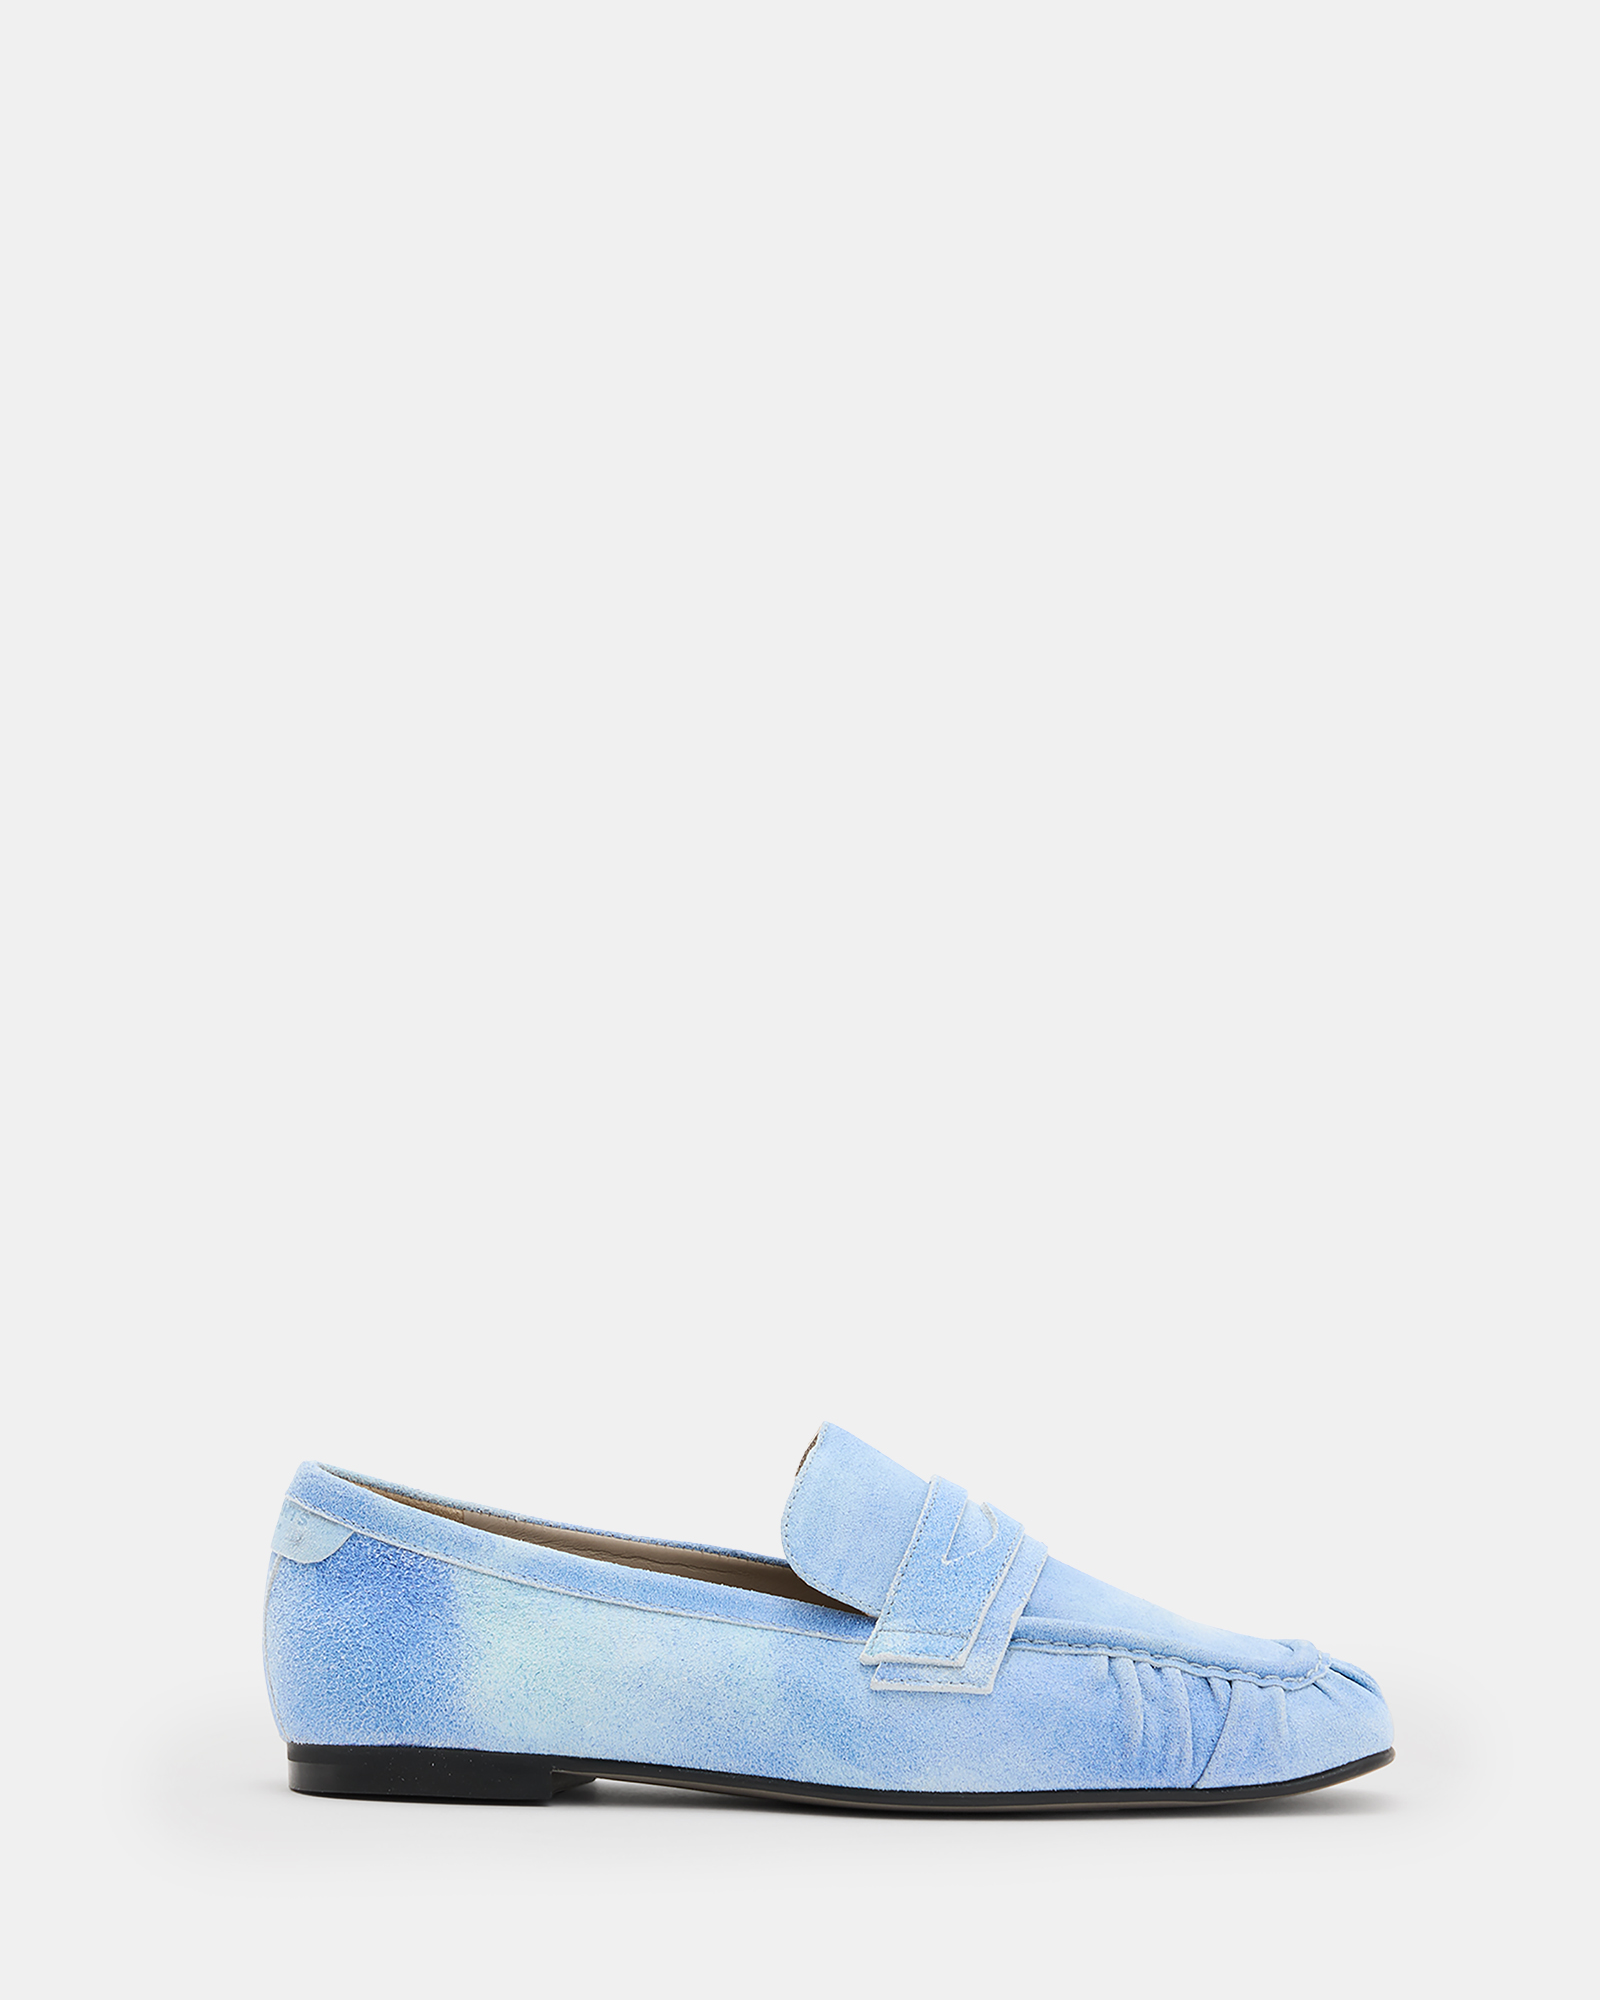 AllSaints Sapphire Suede Loafer Shoes